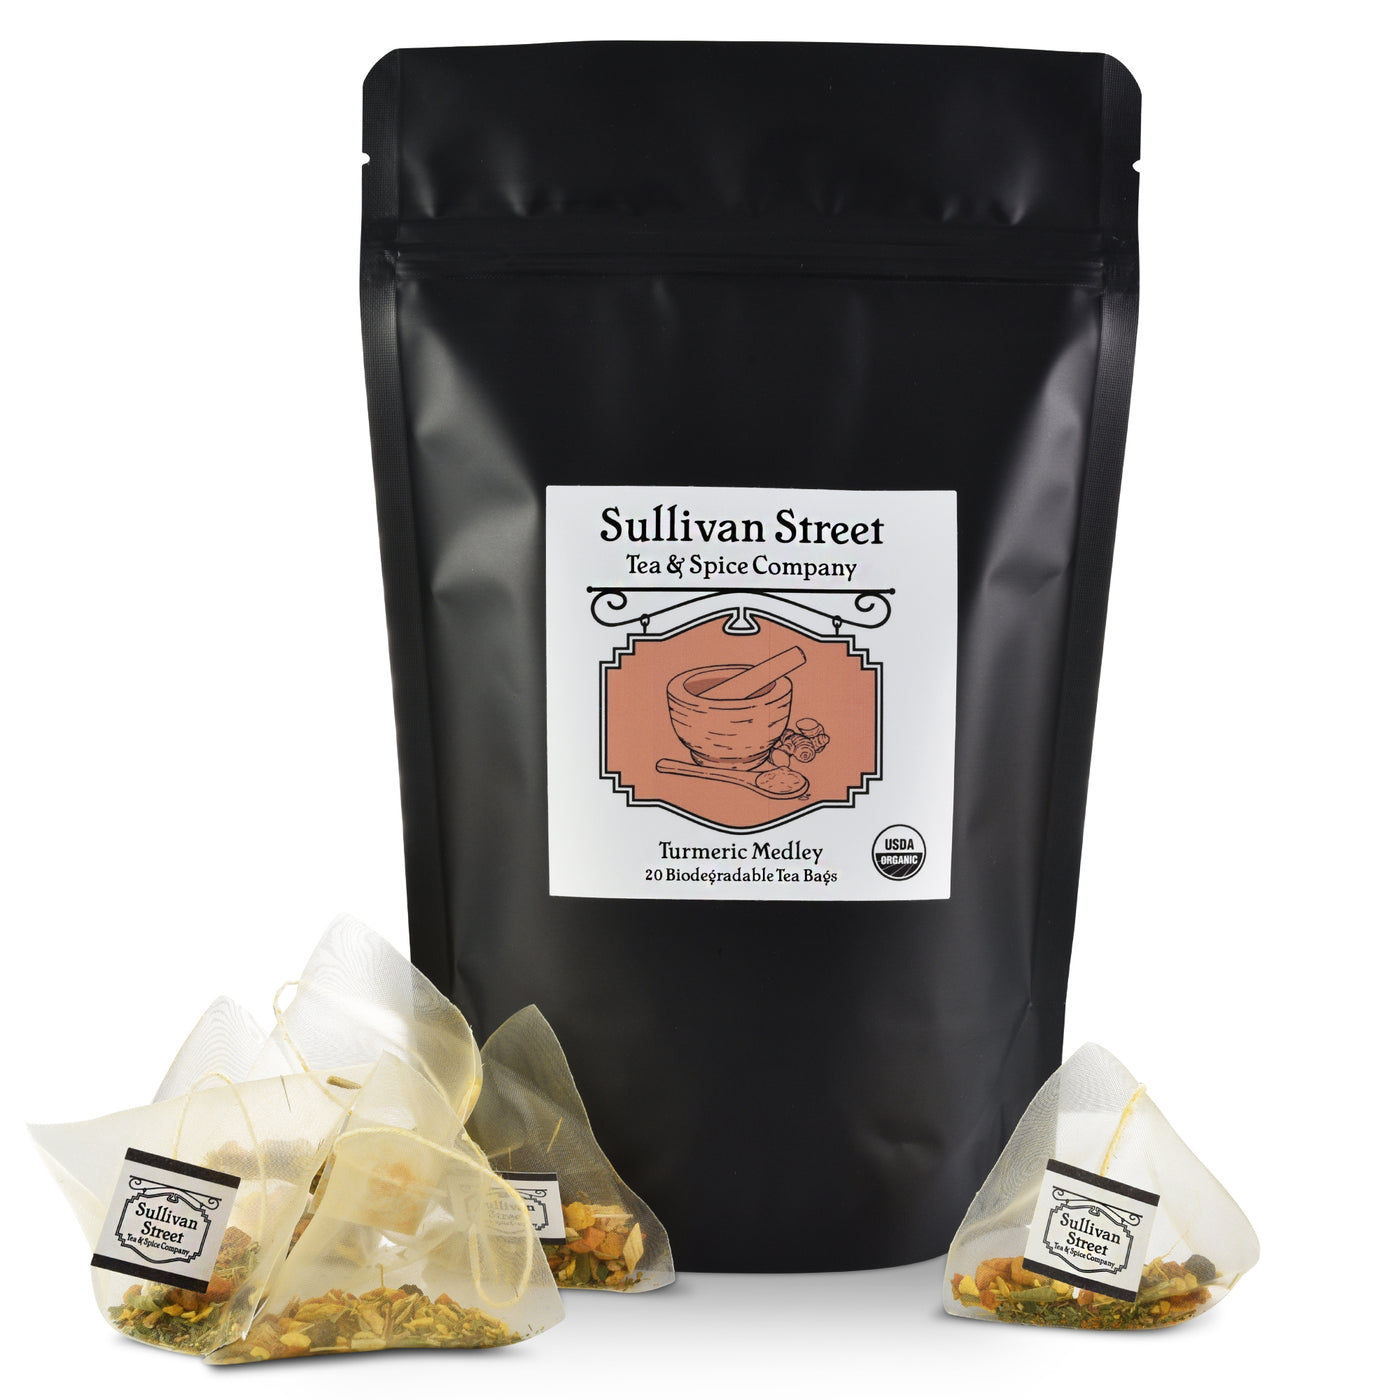 Turmeric Medley Tea Bags - Sullivan Street Tea & Spice Company